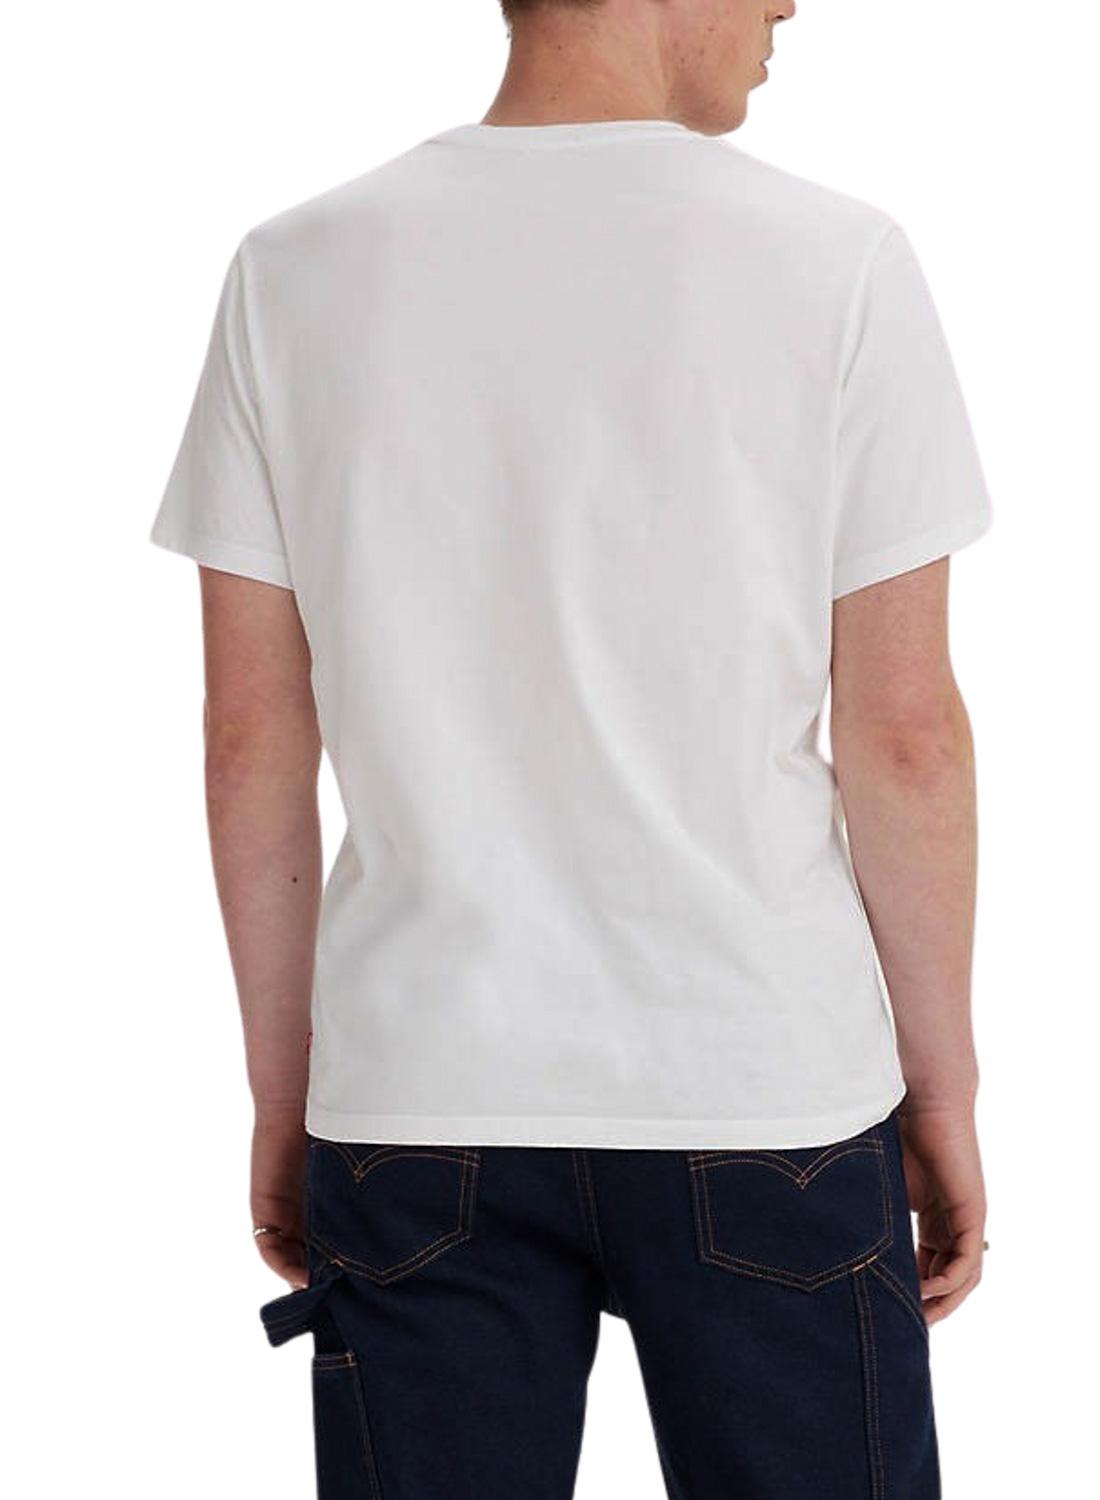 T-Shirt Levis Water Bianco per Uomo